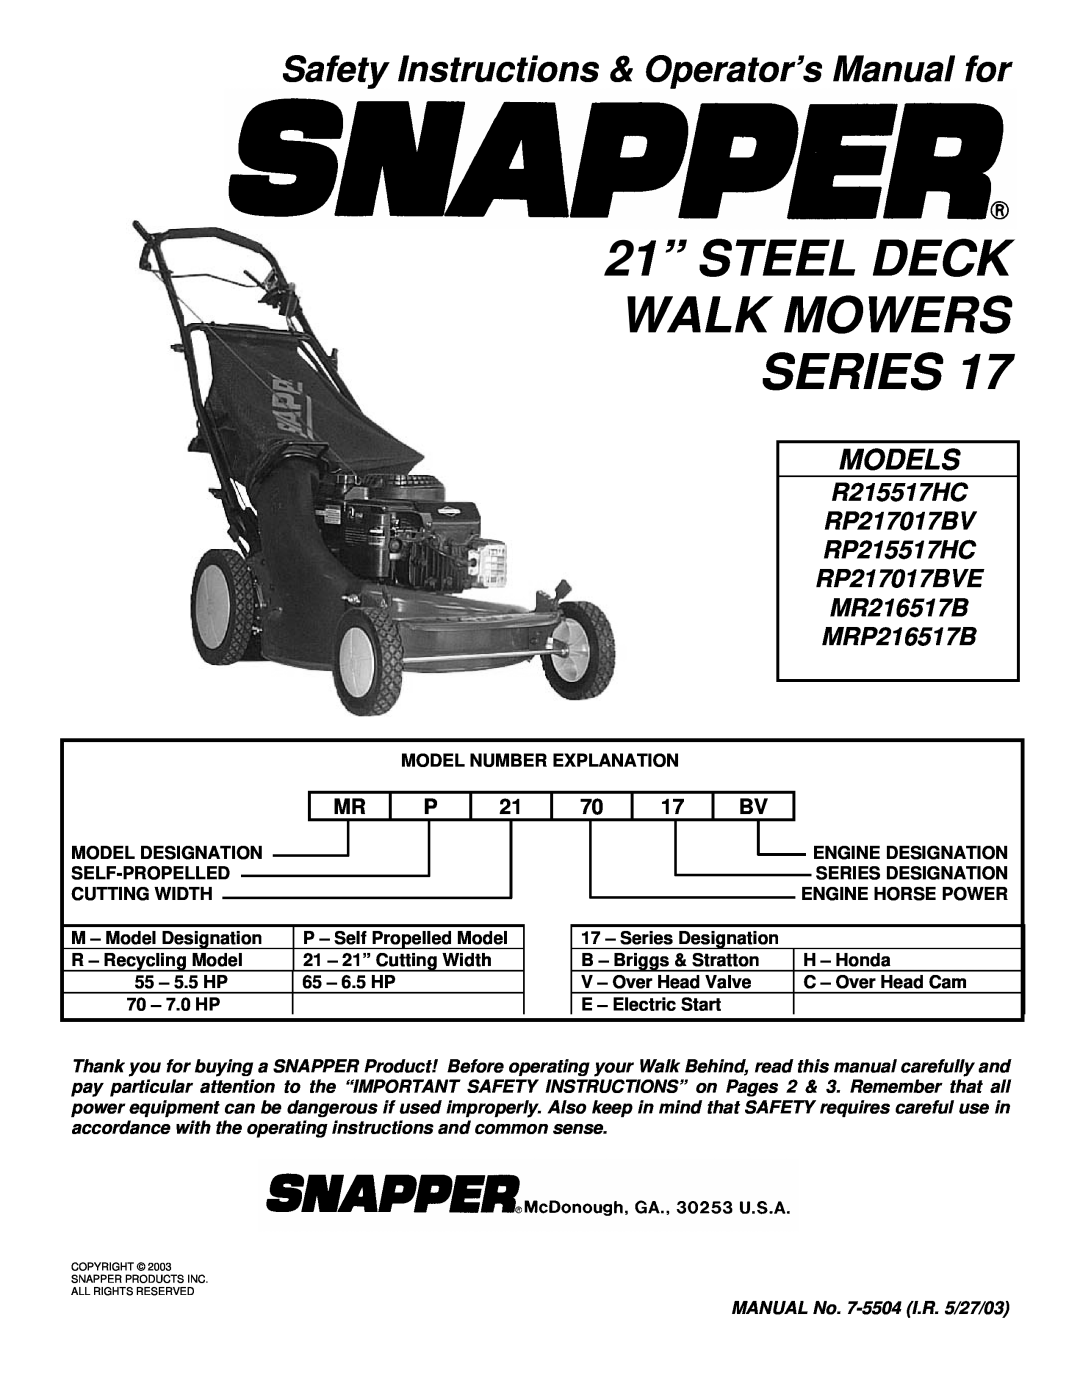 Snapper RP215517HC, RP217017BVE, MRP215517B important safety instructions 21” STEEL DECK WALK MOWERS SERIES, Models 